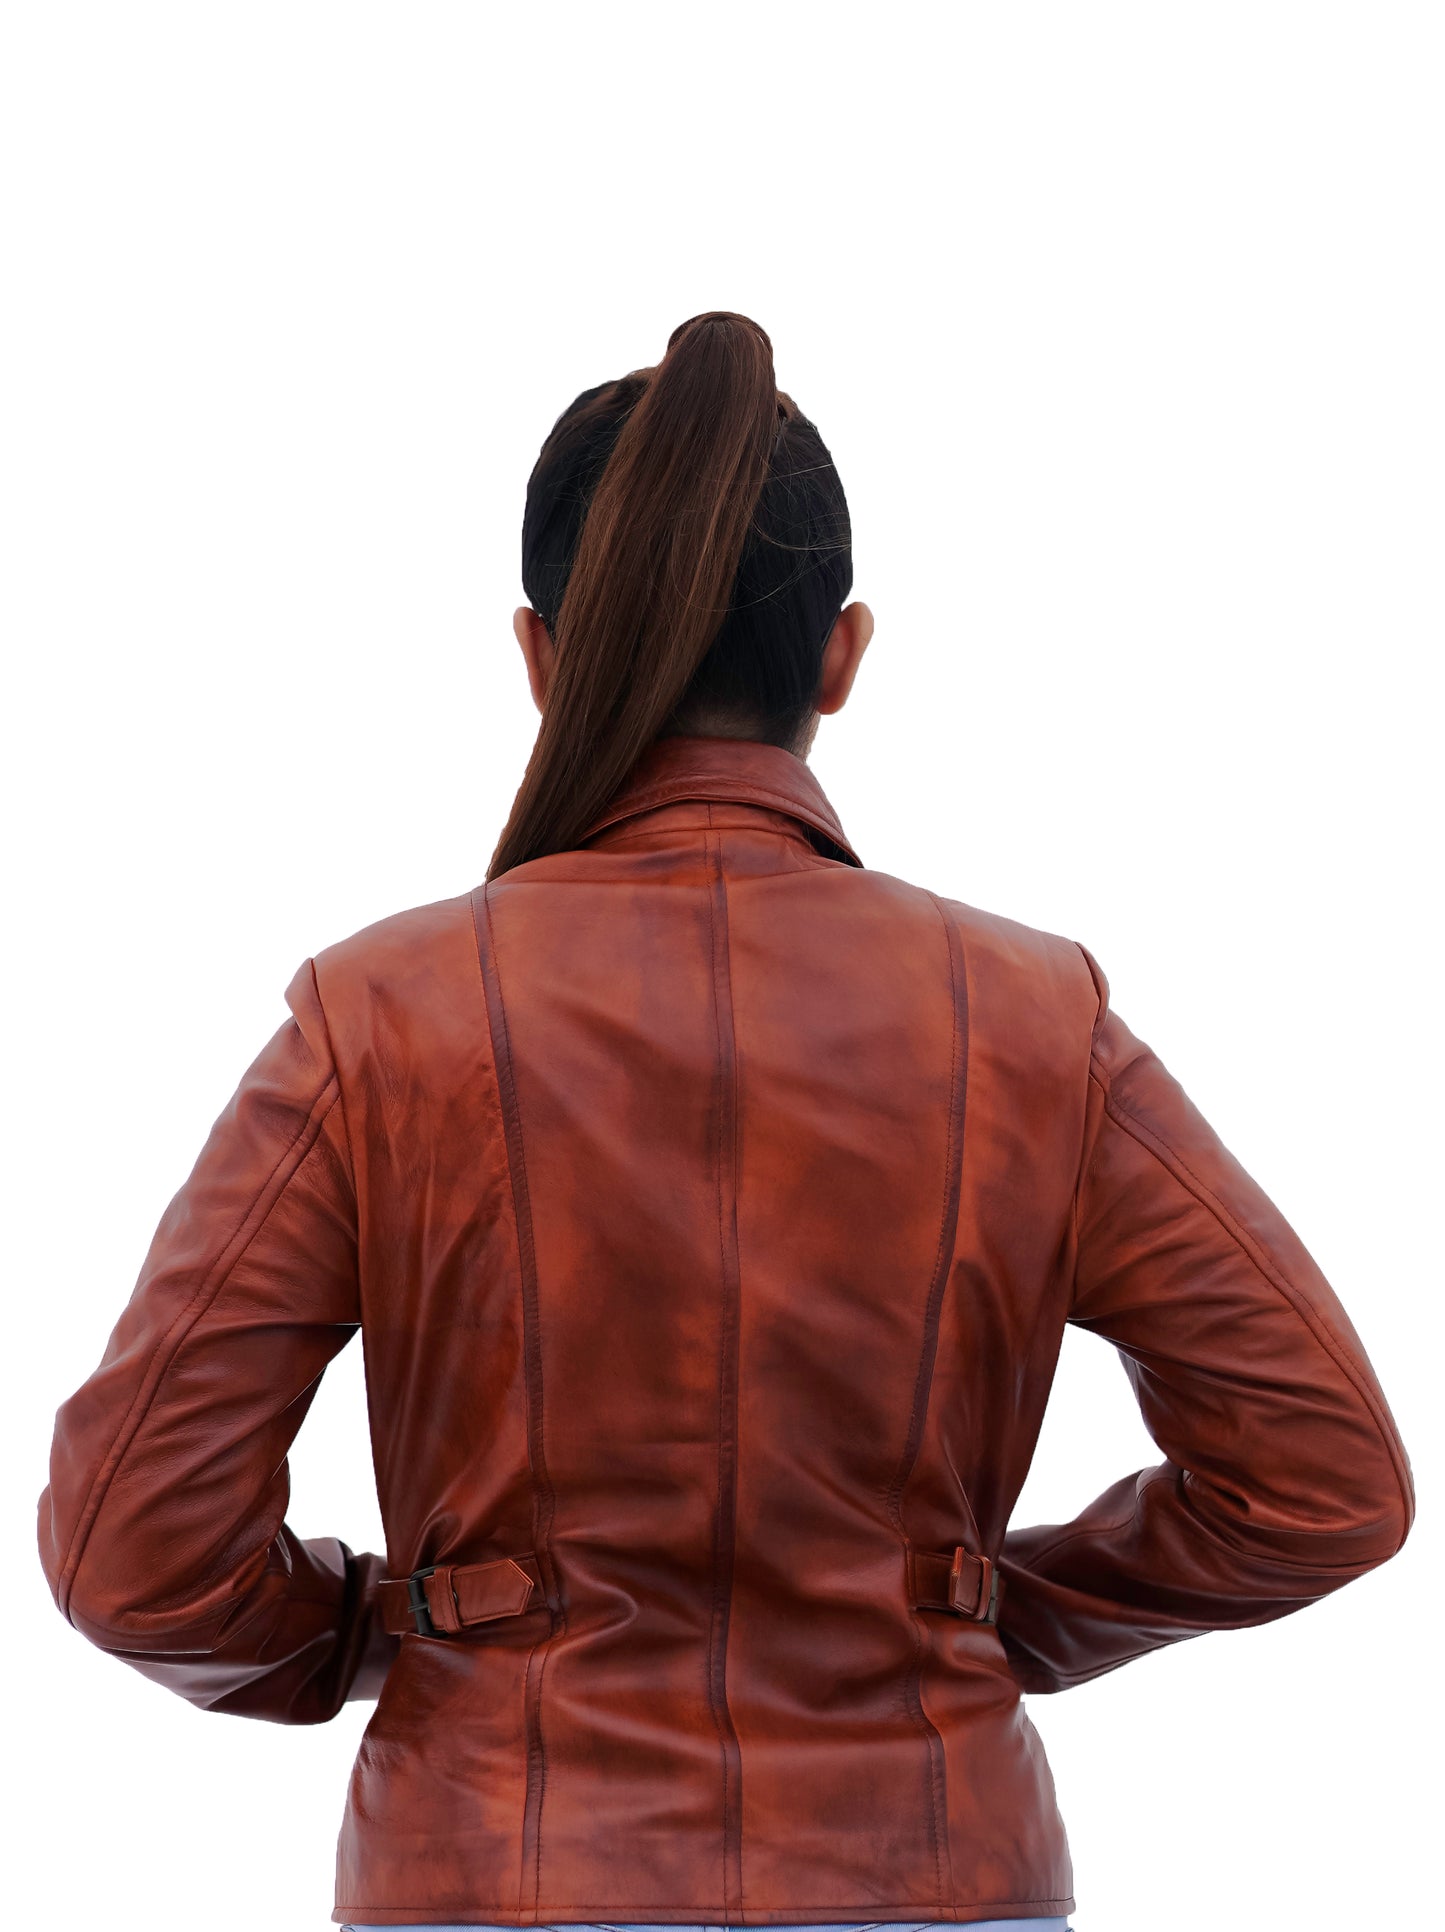 Women's Jennifer Lopez Distressed Brown Leather Motorcycle Jacket